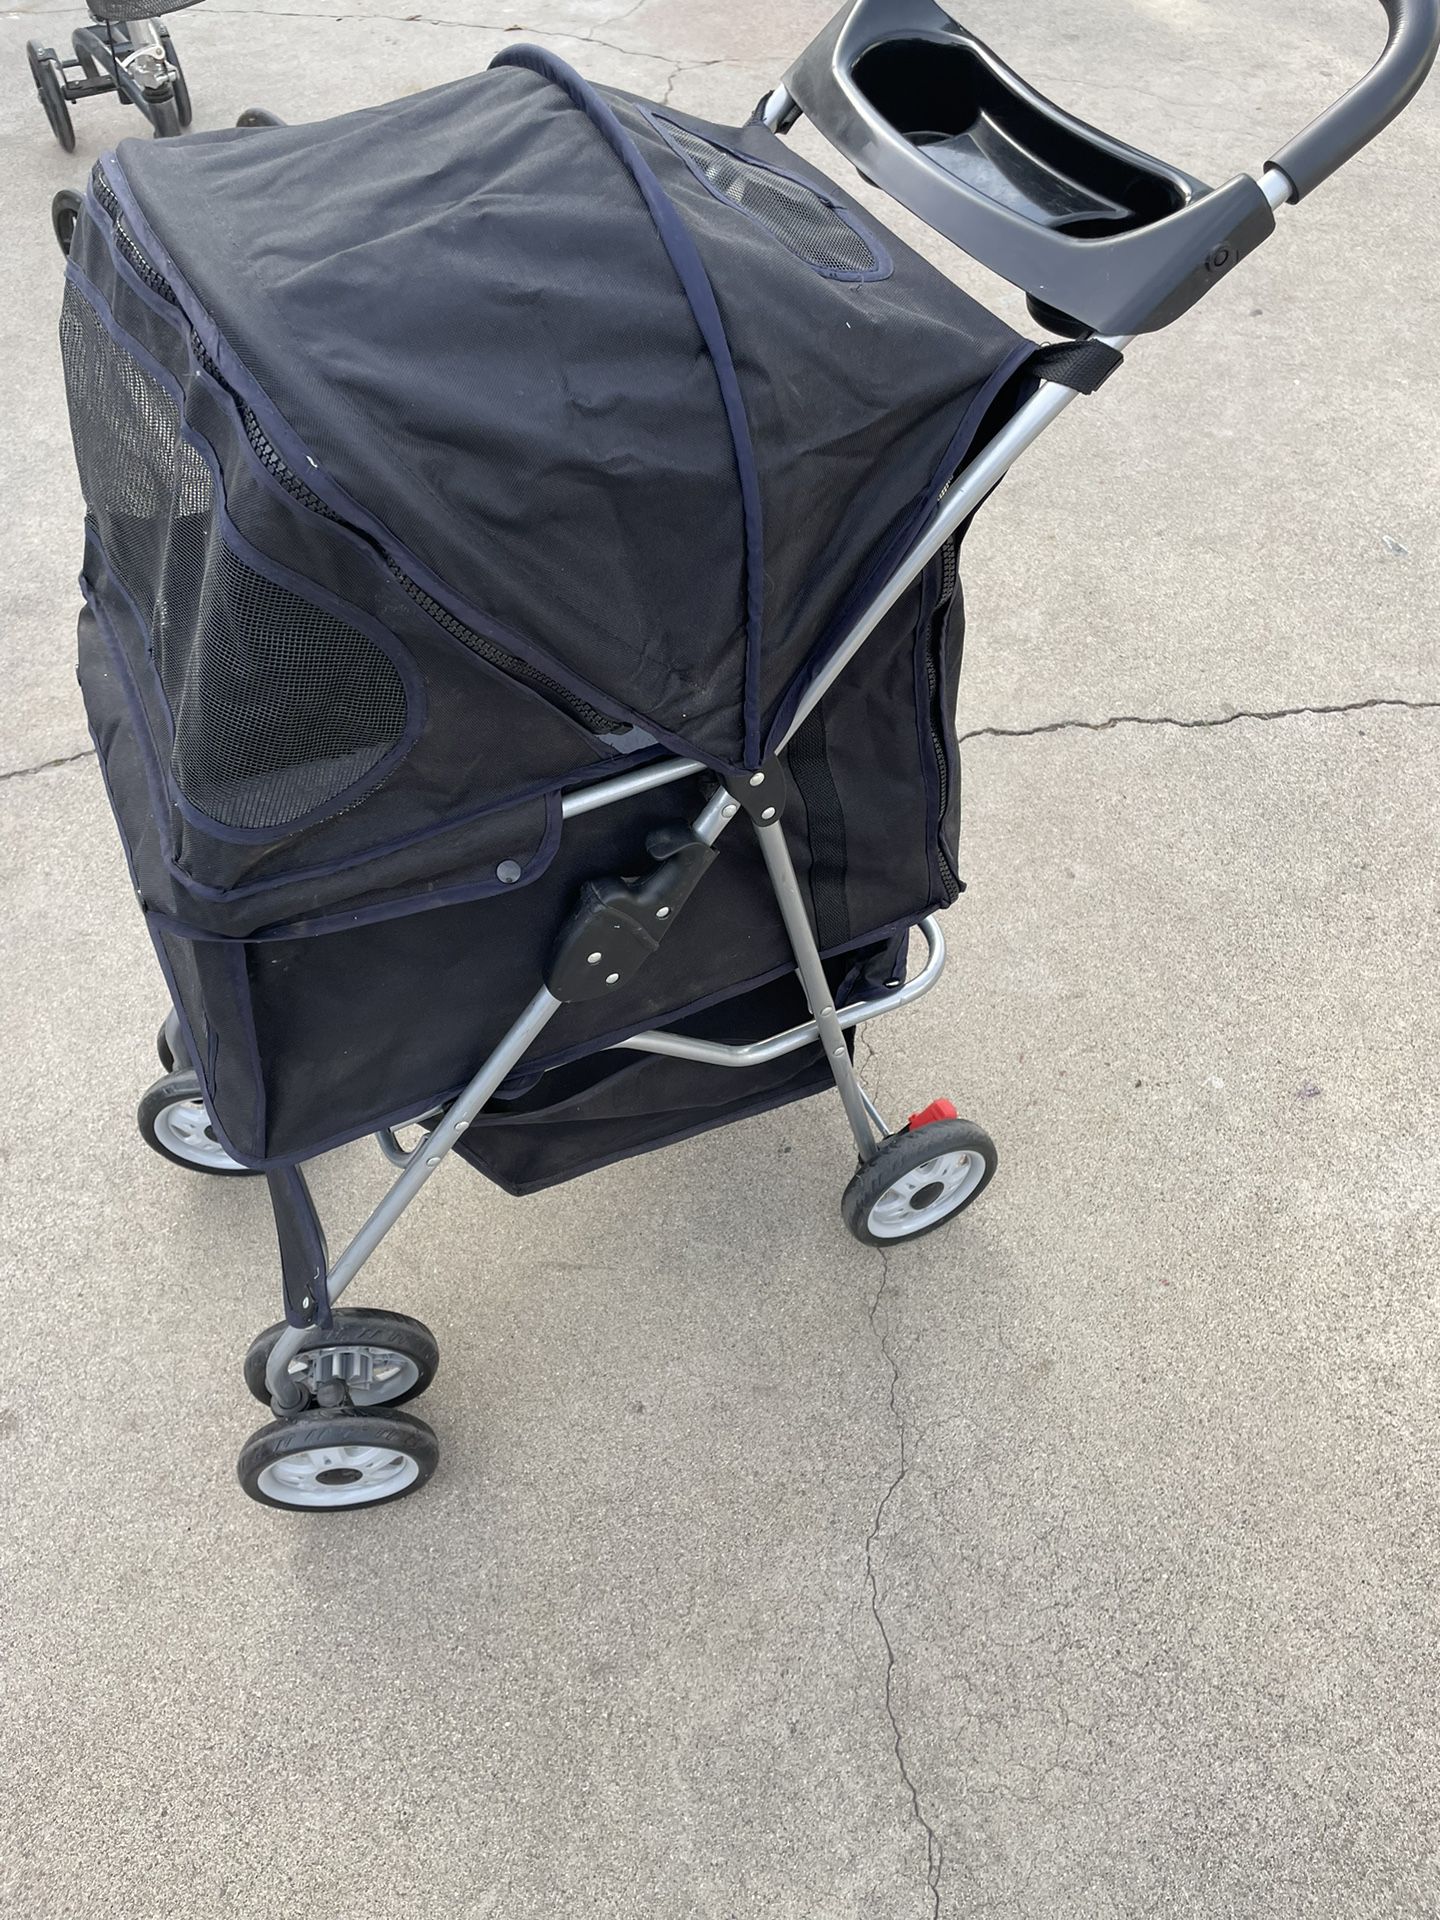 Used stroller for dogs $60 OBO 